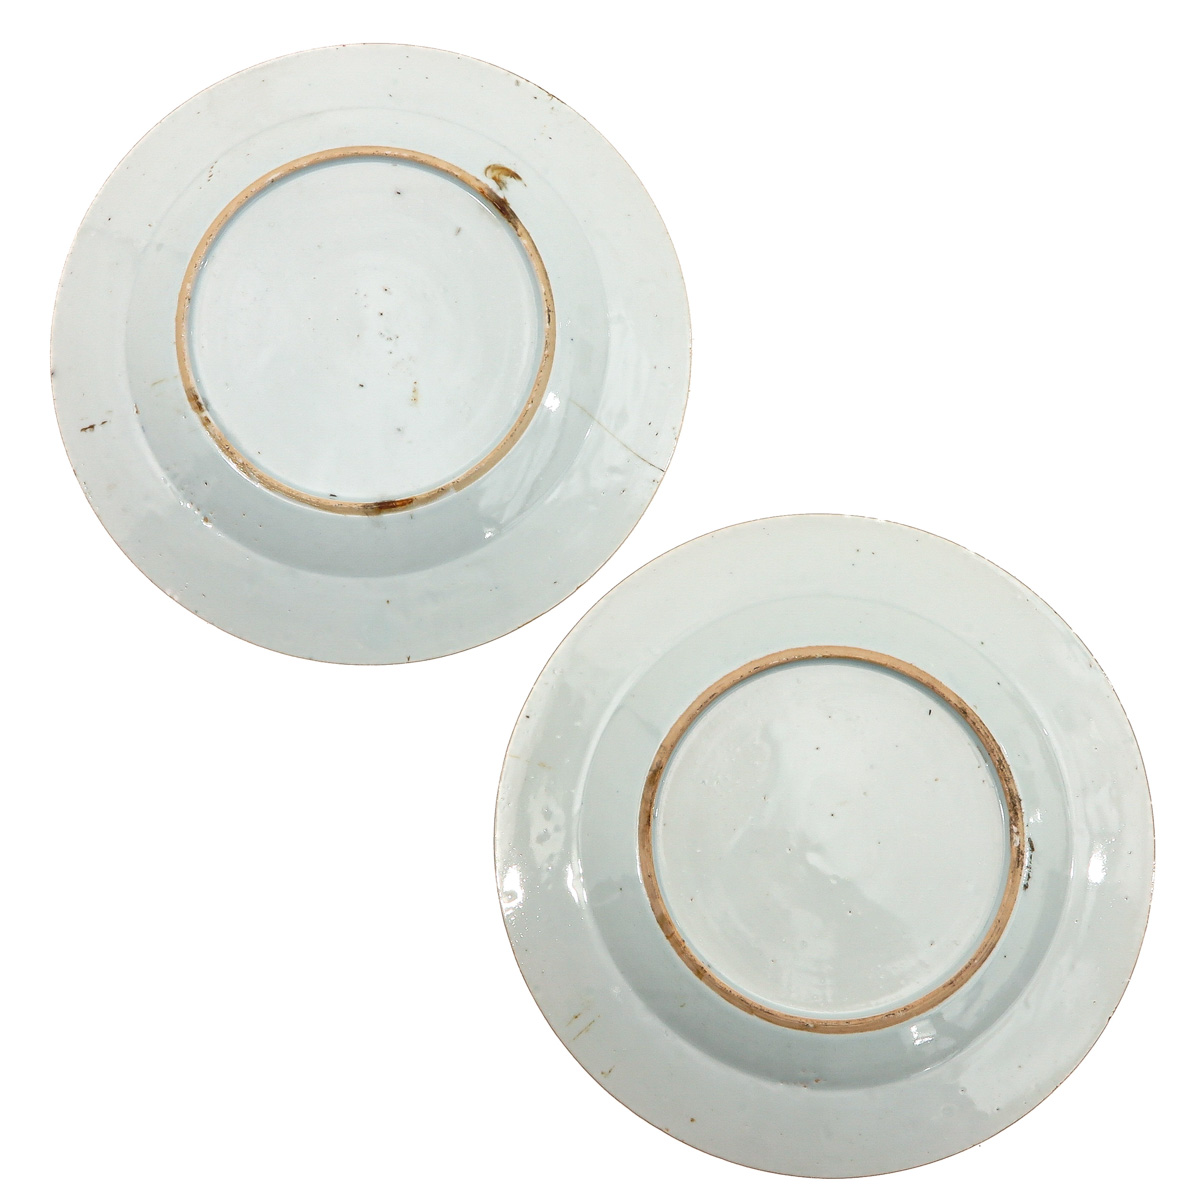 A Series of 6 Imari Plates - Image 4 of 10